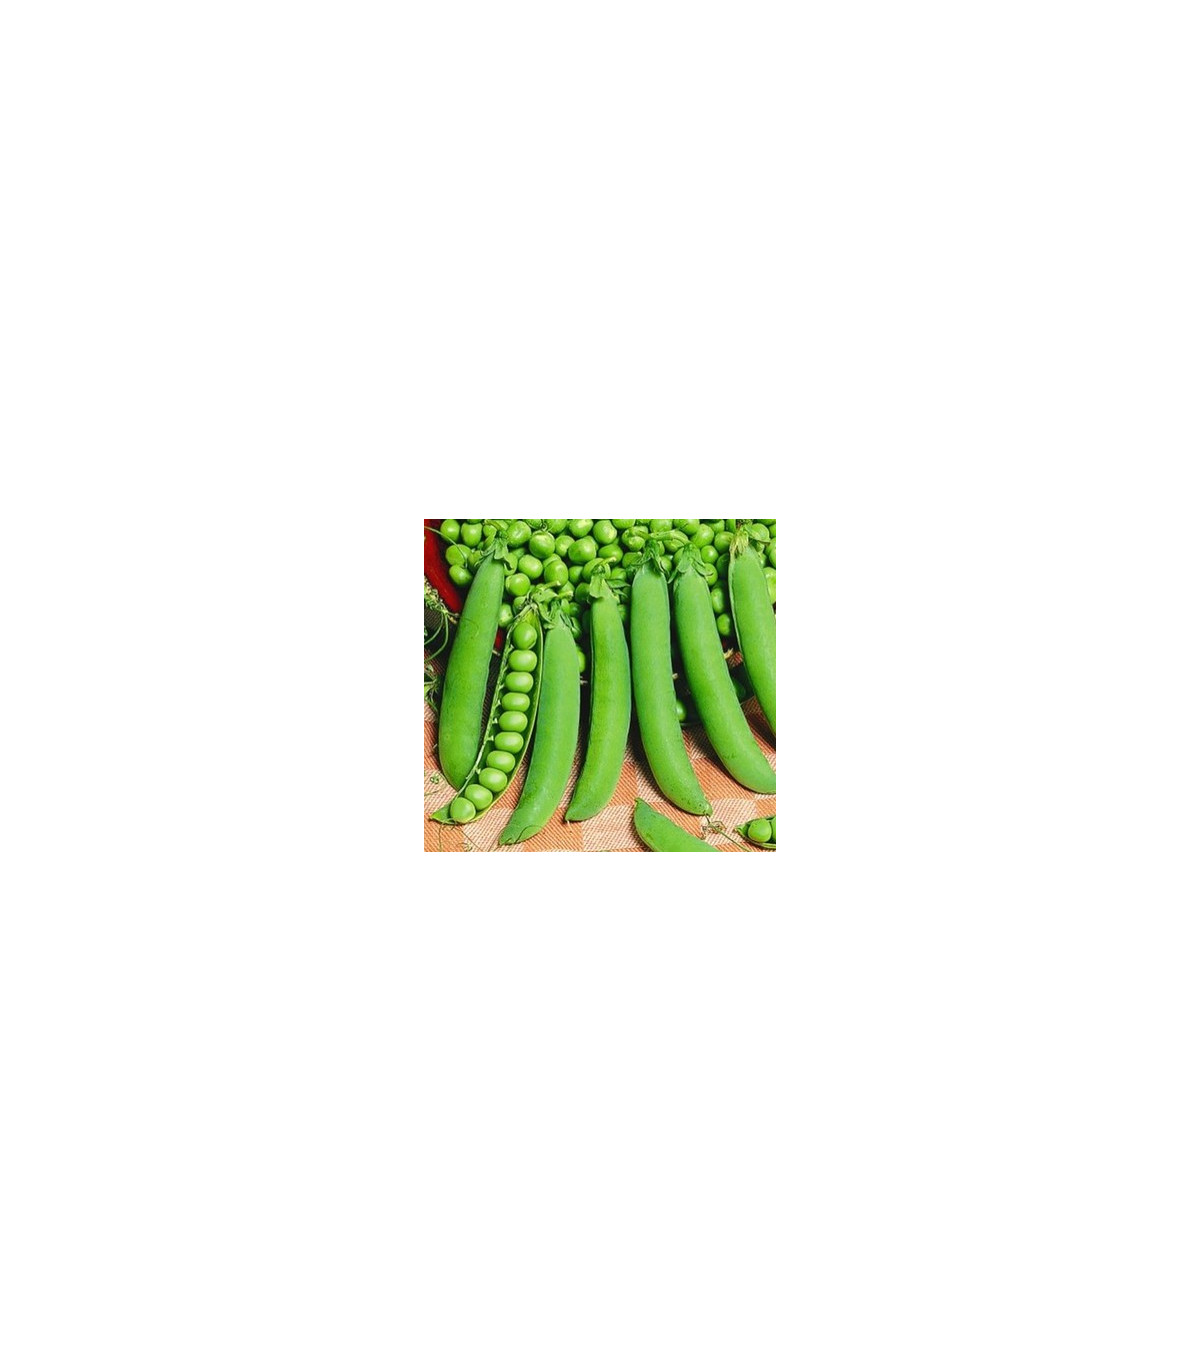 Hrách cukrový Hendriks - Pisum sativum - osivo hrachu - 12 g